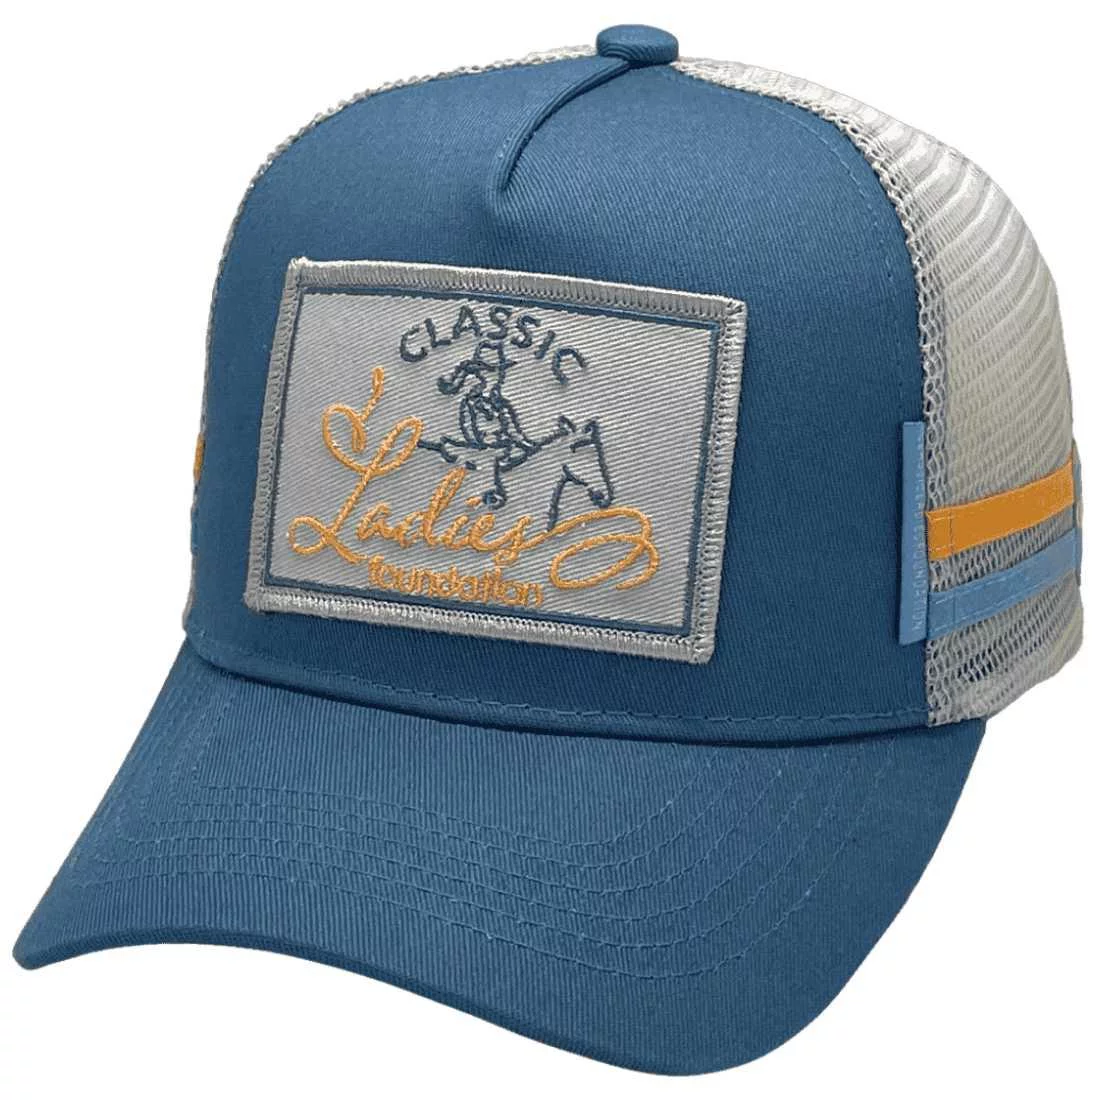 Classic Ladies Foundation LP Original Midrange Aussie Trucker Hats with double side bands Cotton Blue Grey Gold